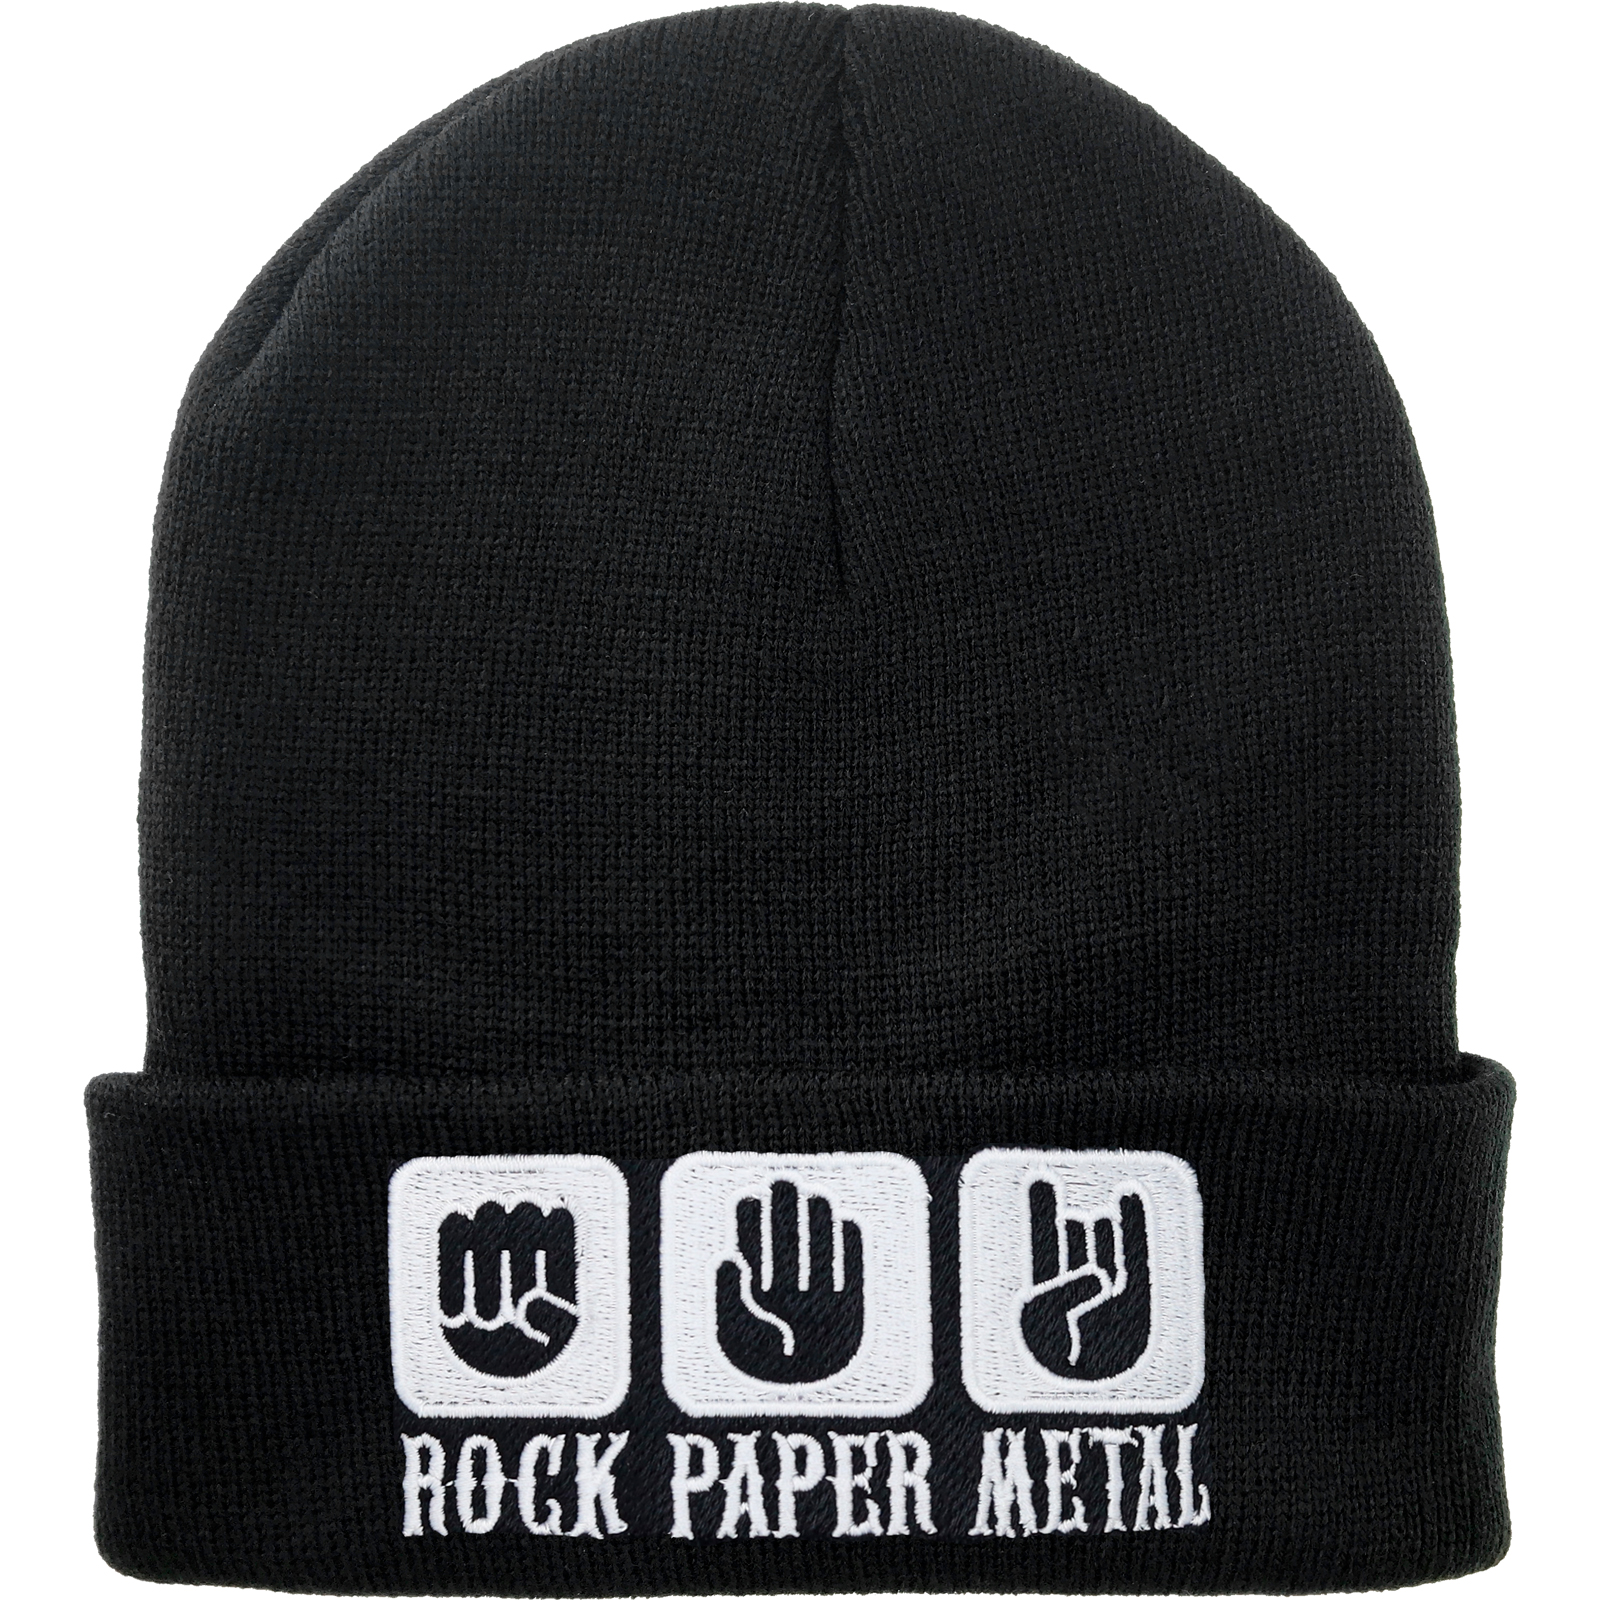 Rock ... Paper ... Metal - Strickmütze